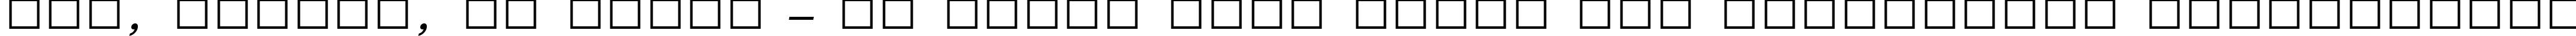 Пример написания шрифтом Letter Gothic MT Bold Oblique текста на украинском